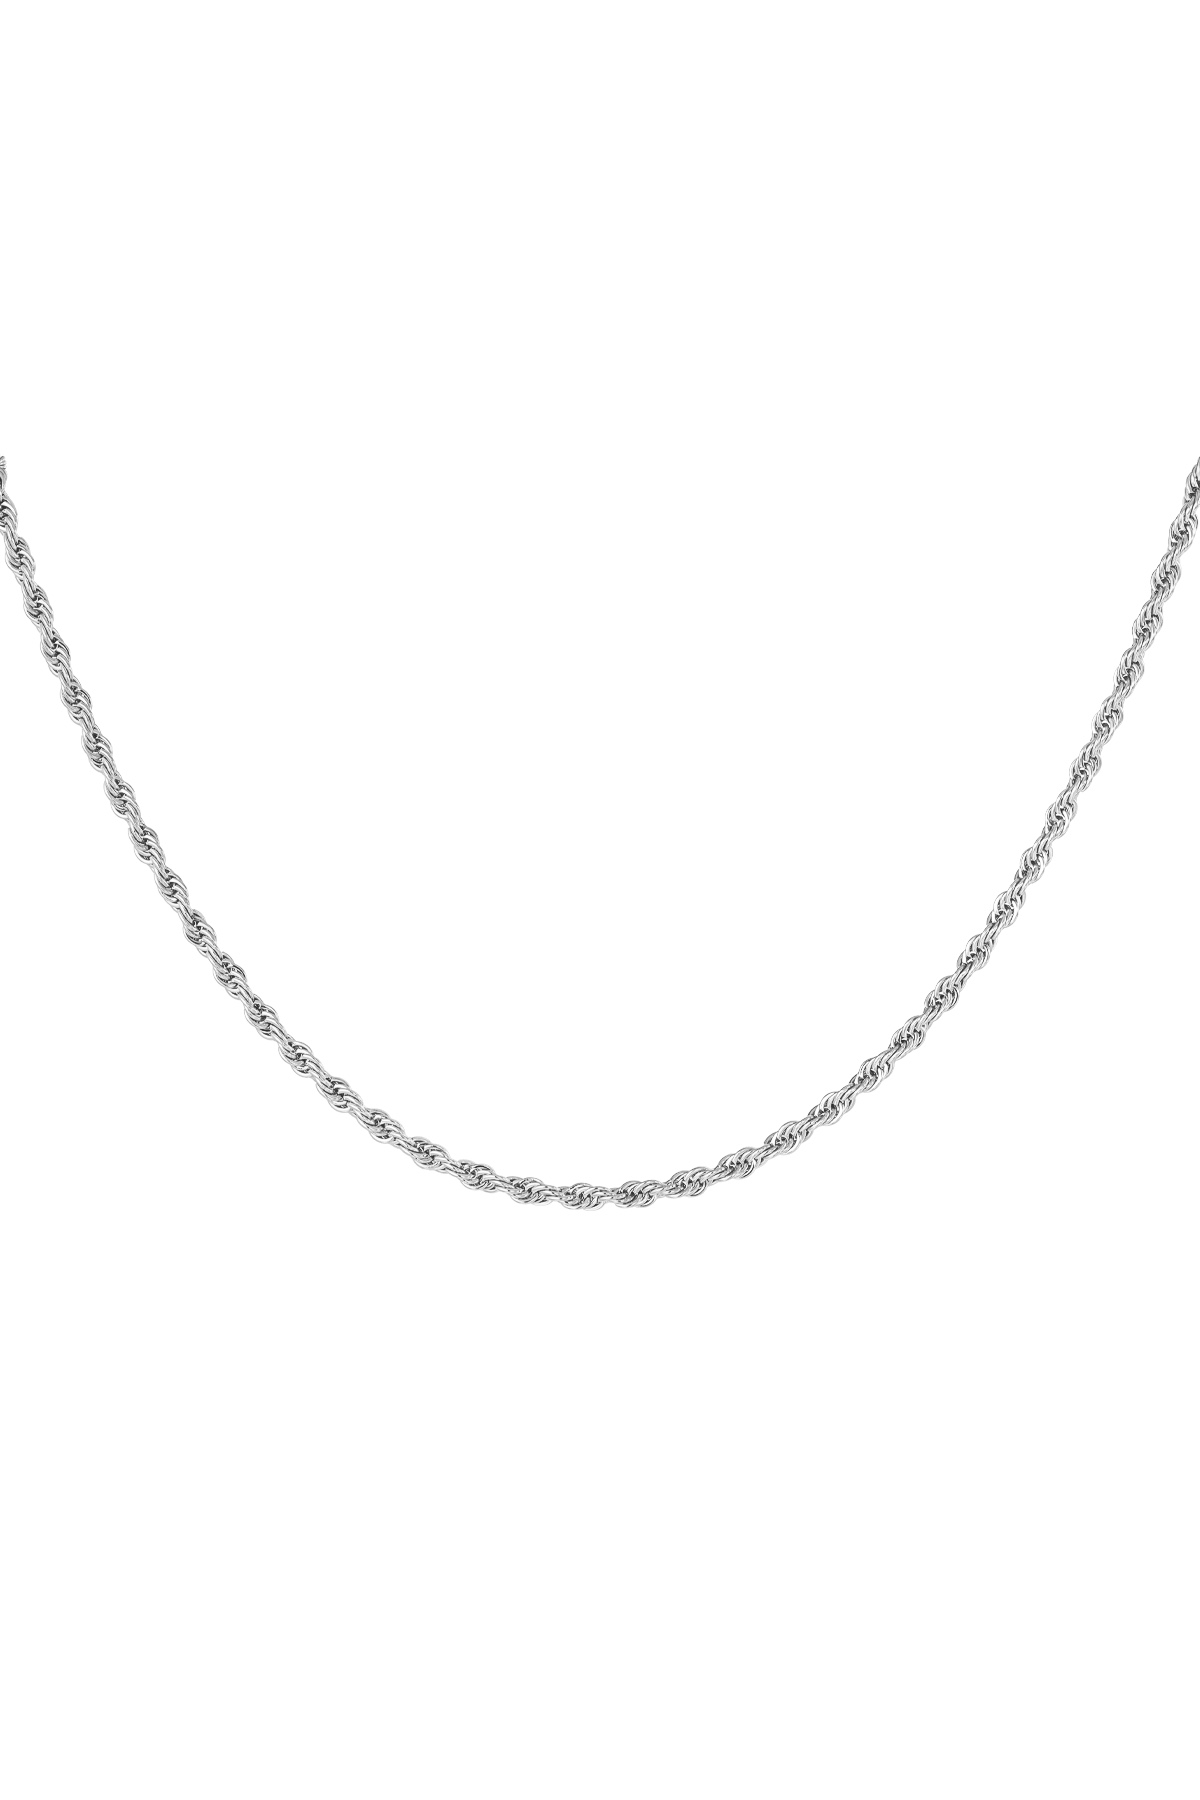 Halskette gedreht kurz - Silber - 3,0 MM h5 